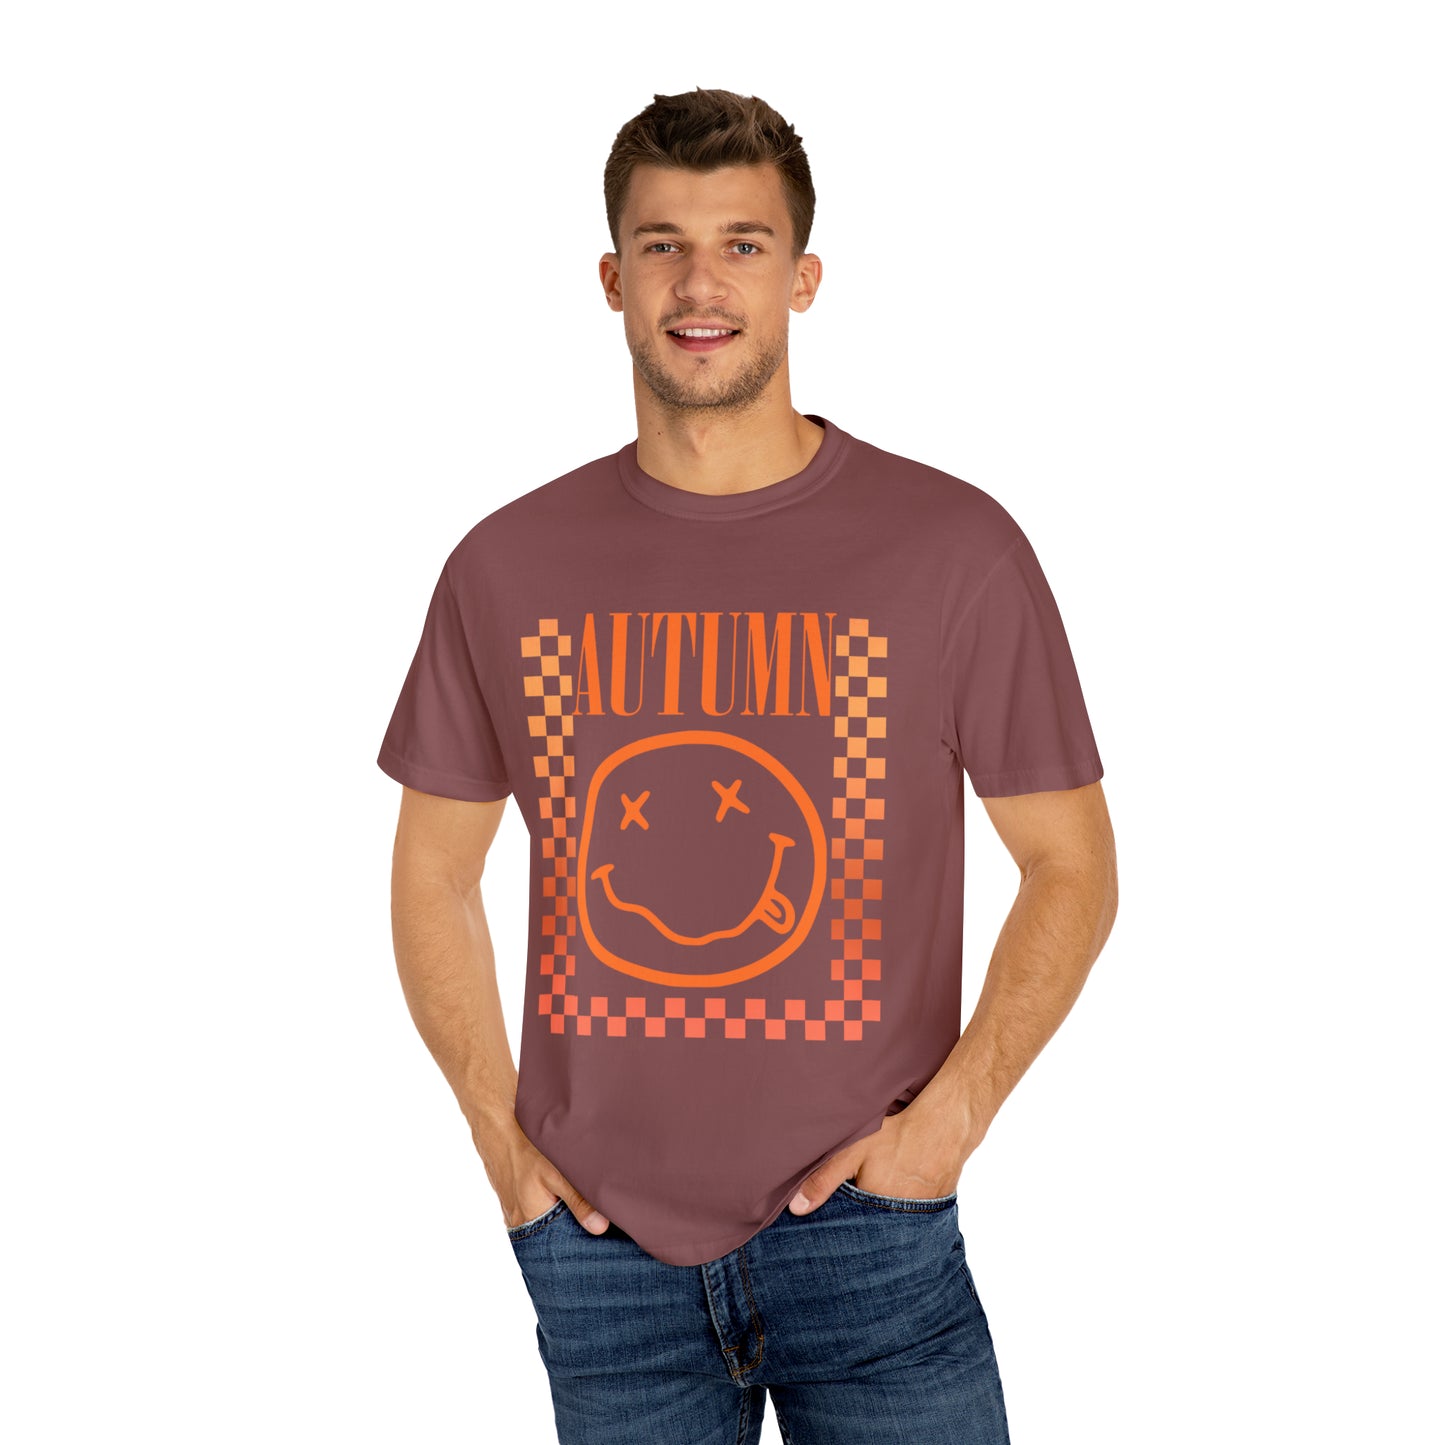 Autum Garment-Dyed T-shirt